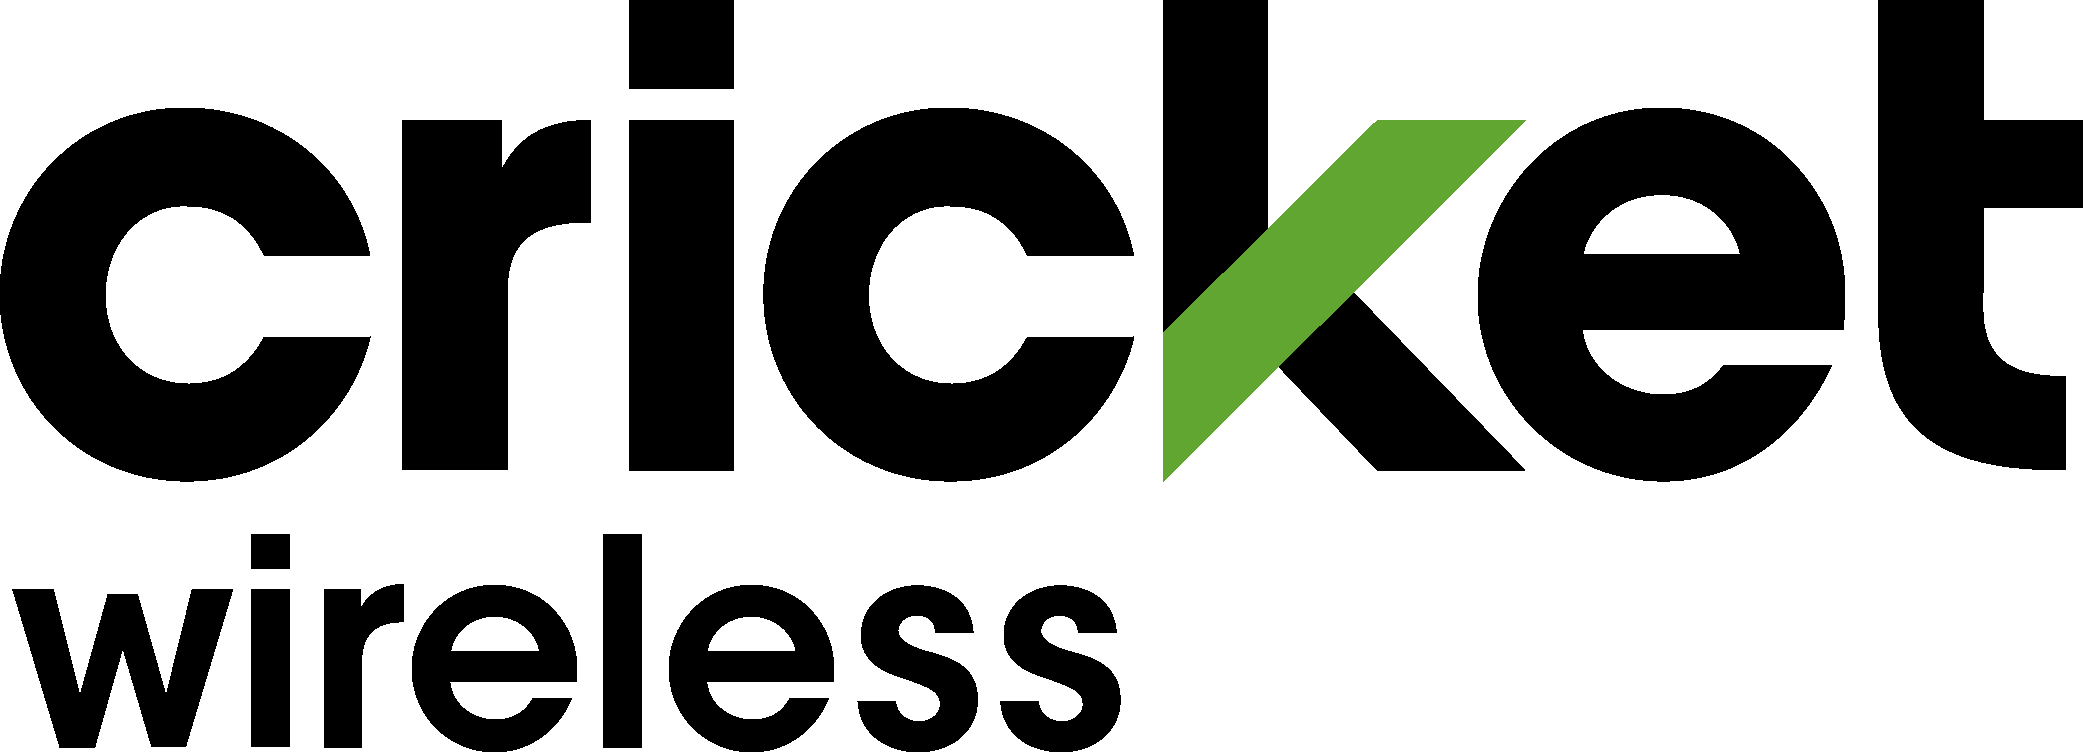 Cricket Wireless Logo png